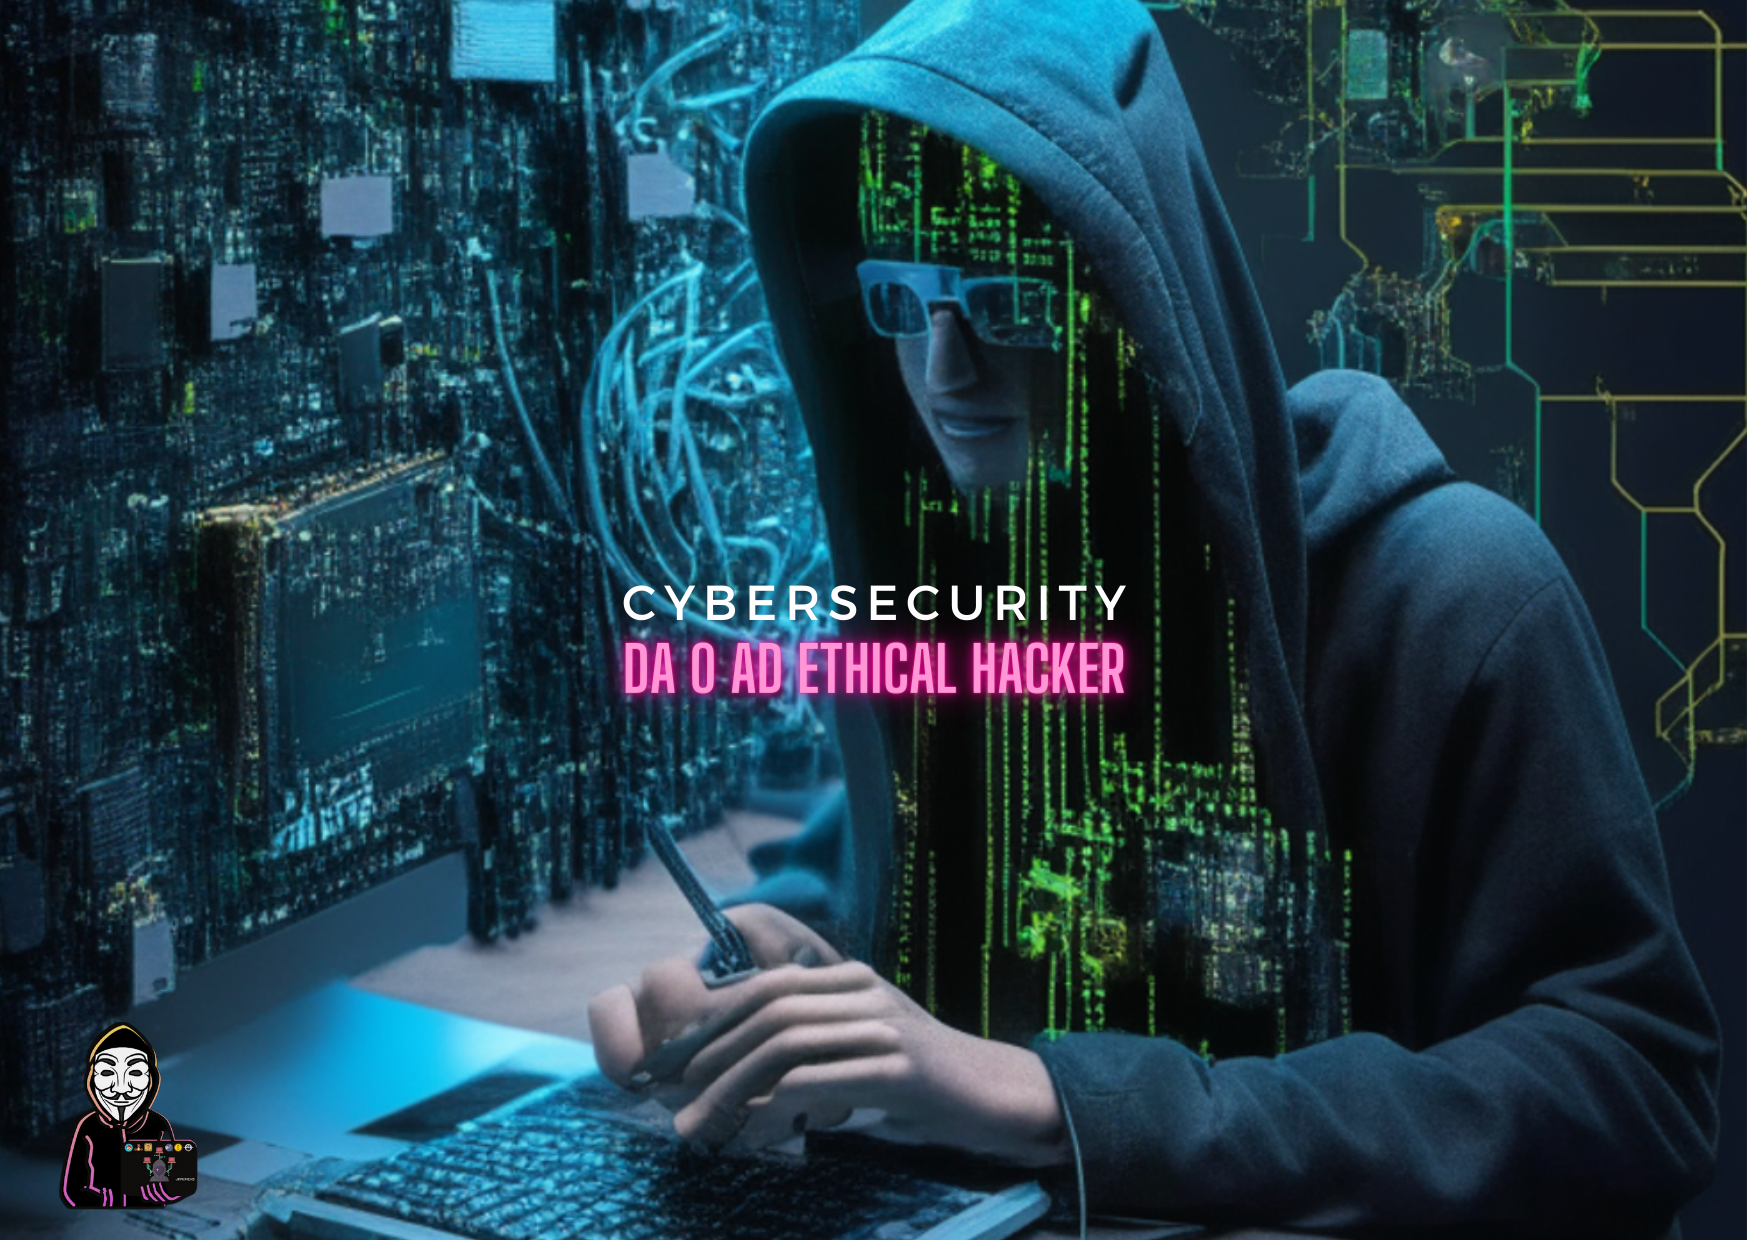 Cybersecurity - Da 0 ad Ethical Hacker